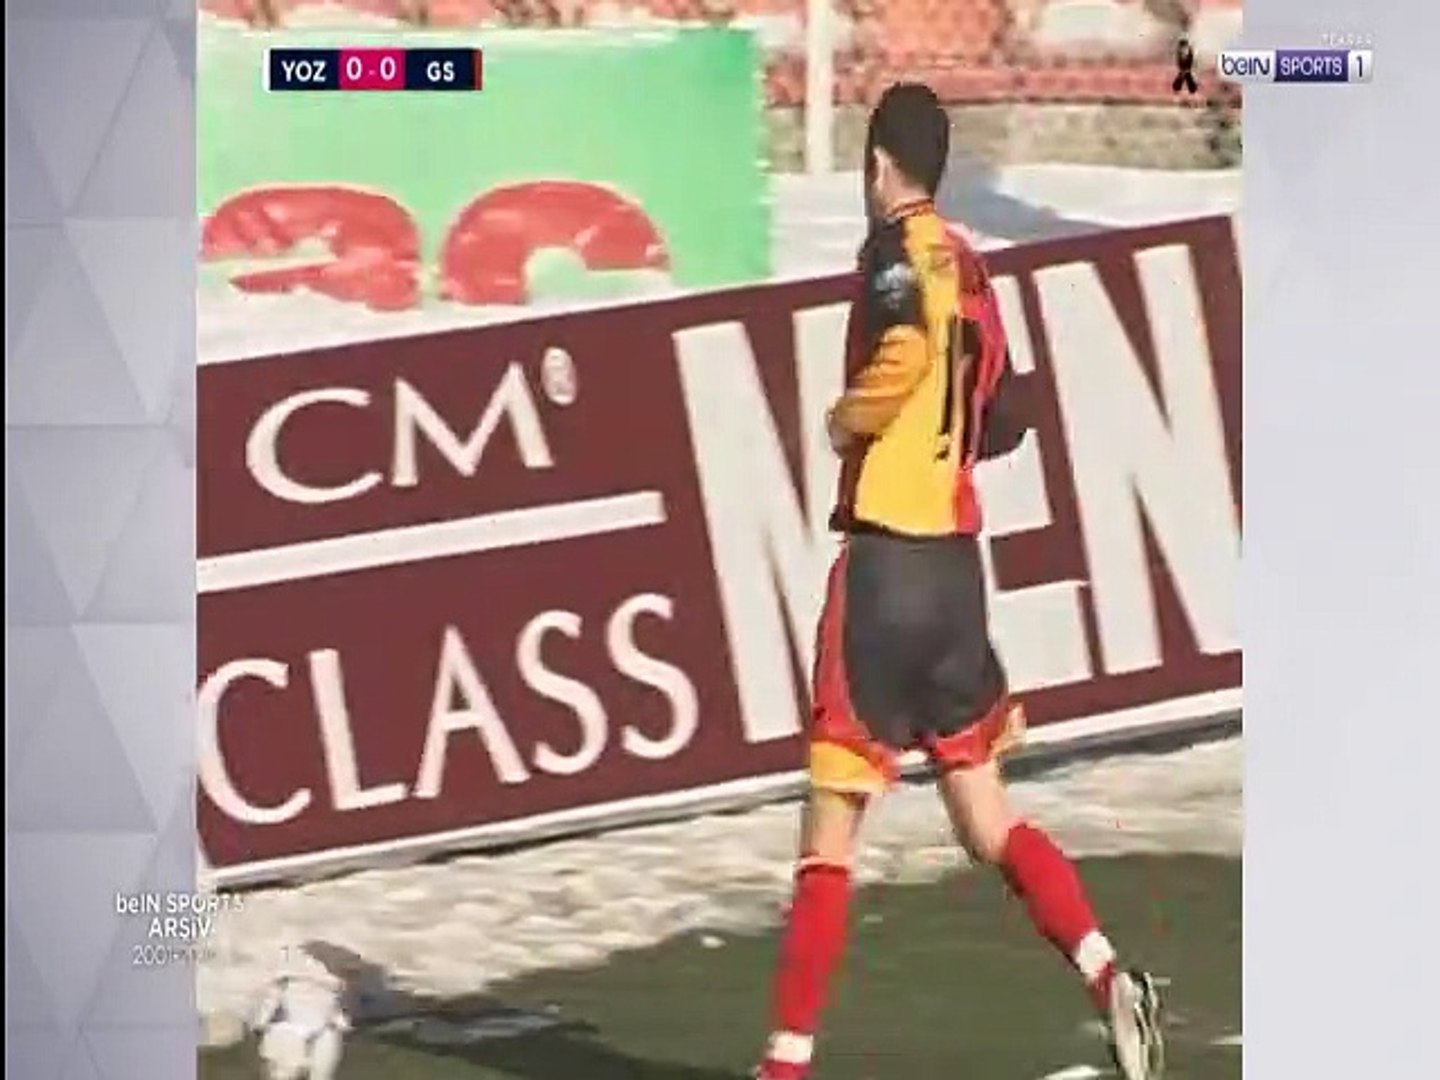 Yimpaş Yozgatspor 3-3 Galatasaray (23.12.2001) - Dailymotion Video